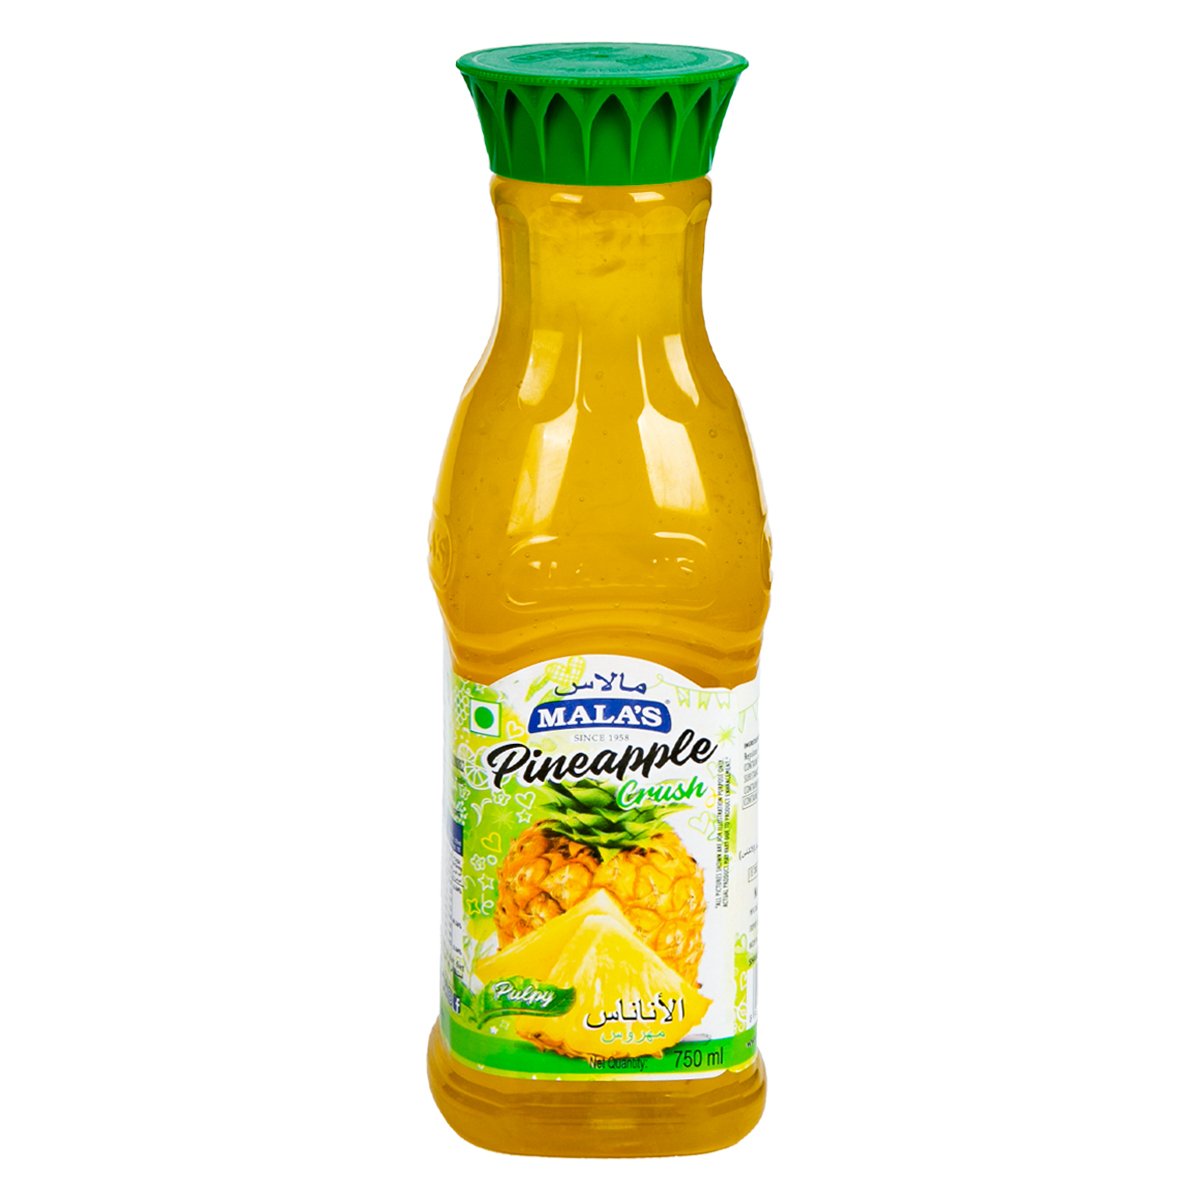 Mala's Pineapple Crush Cordial 750 ml